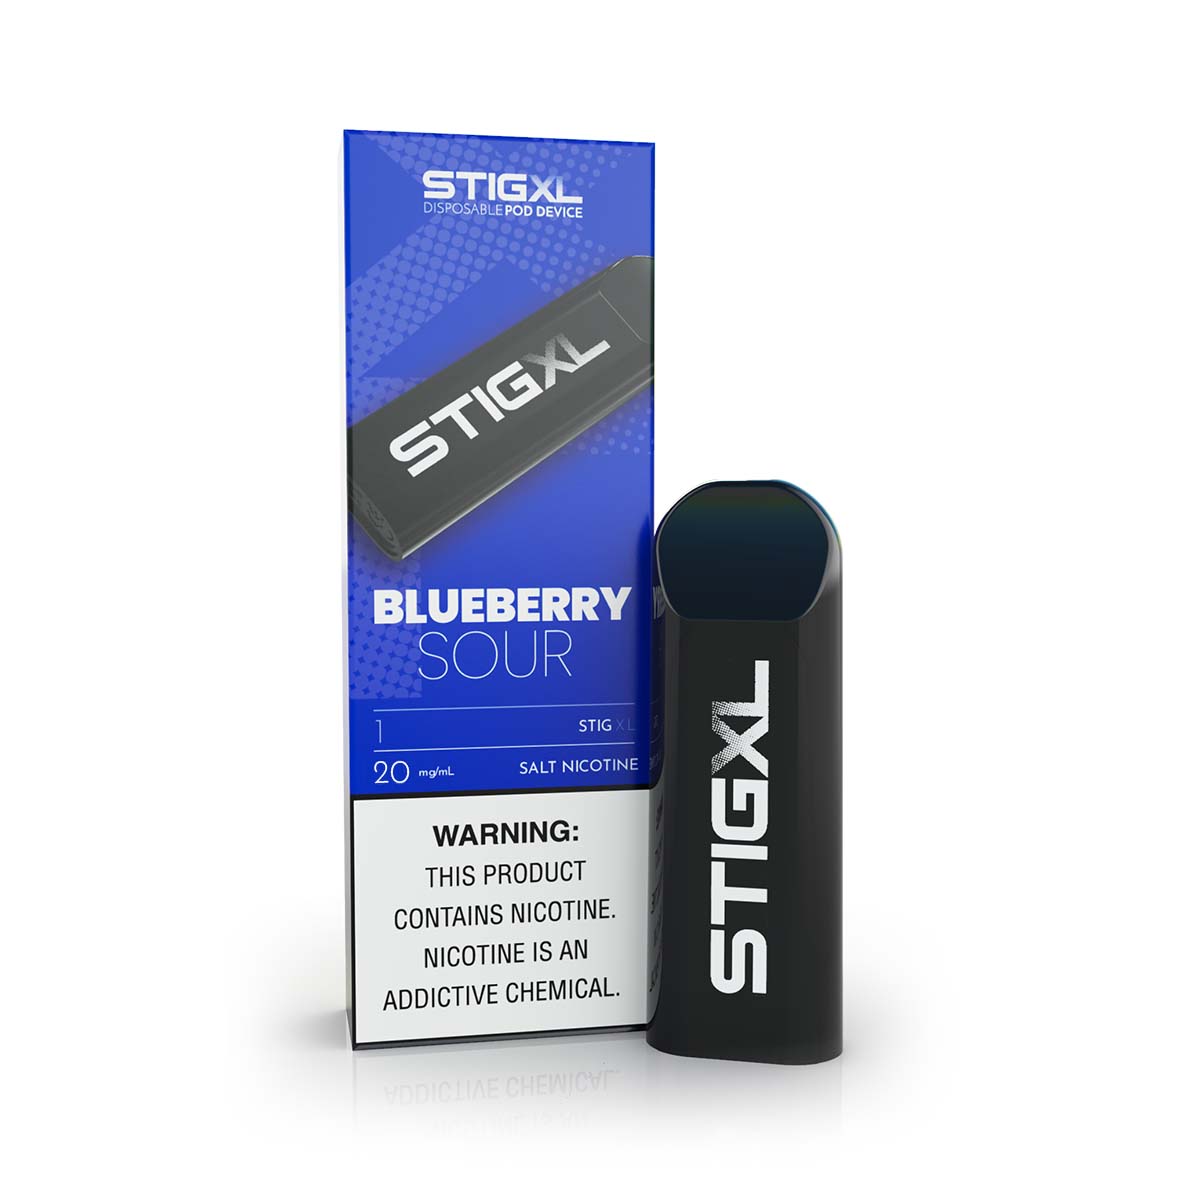 Stig XL Blueberry Sour